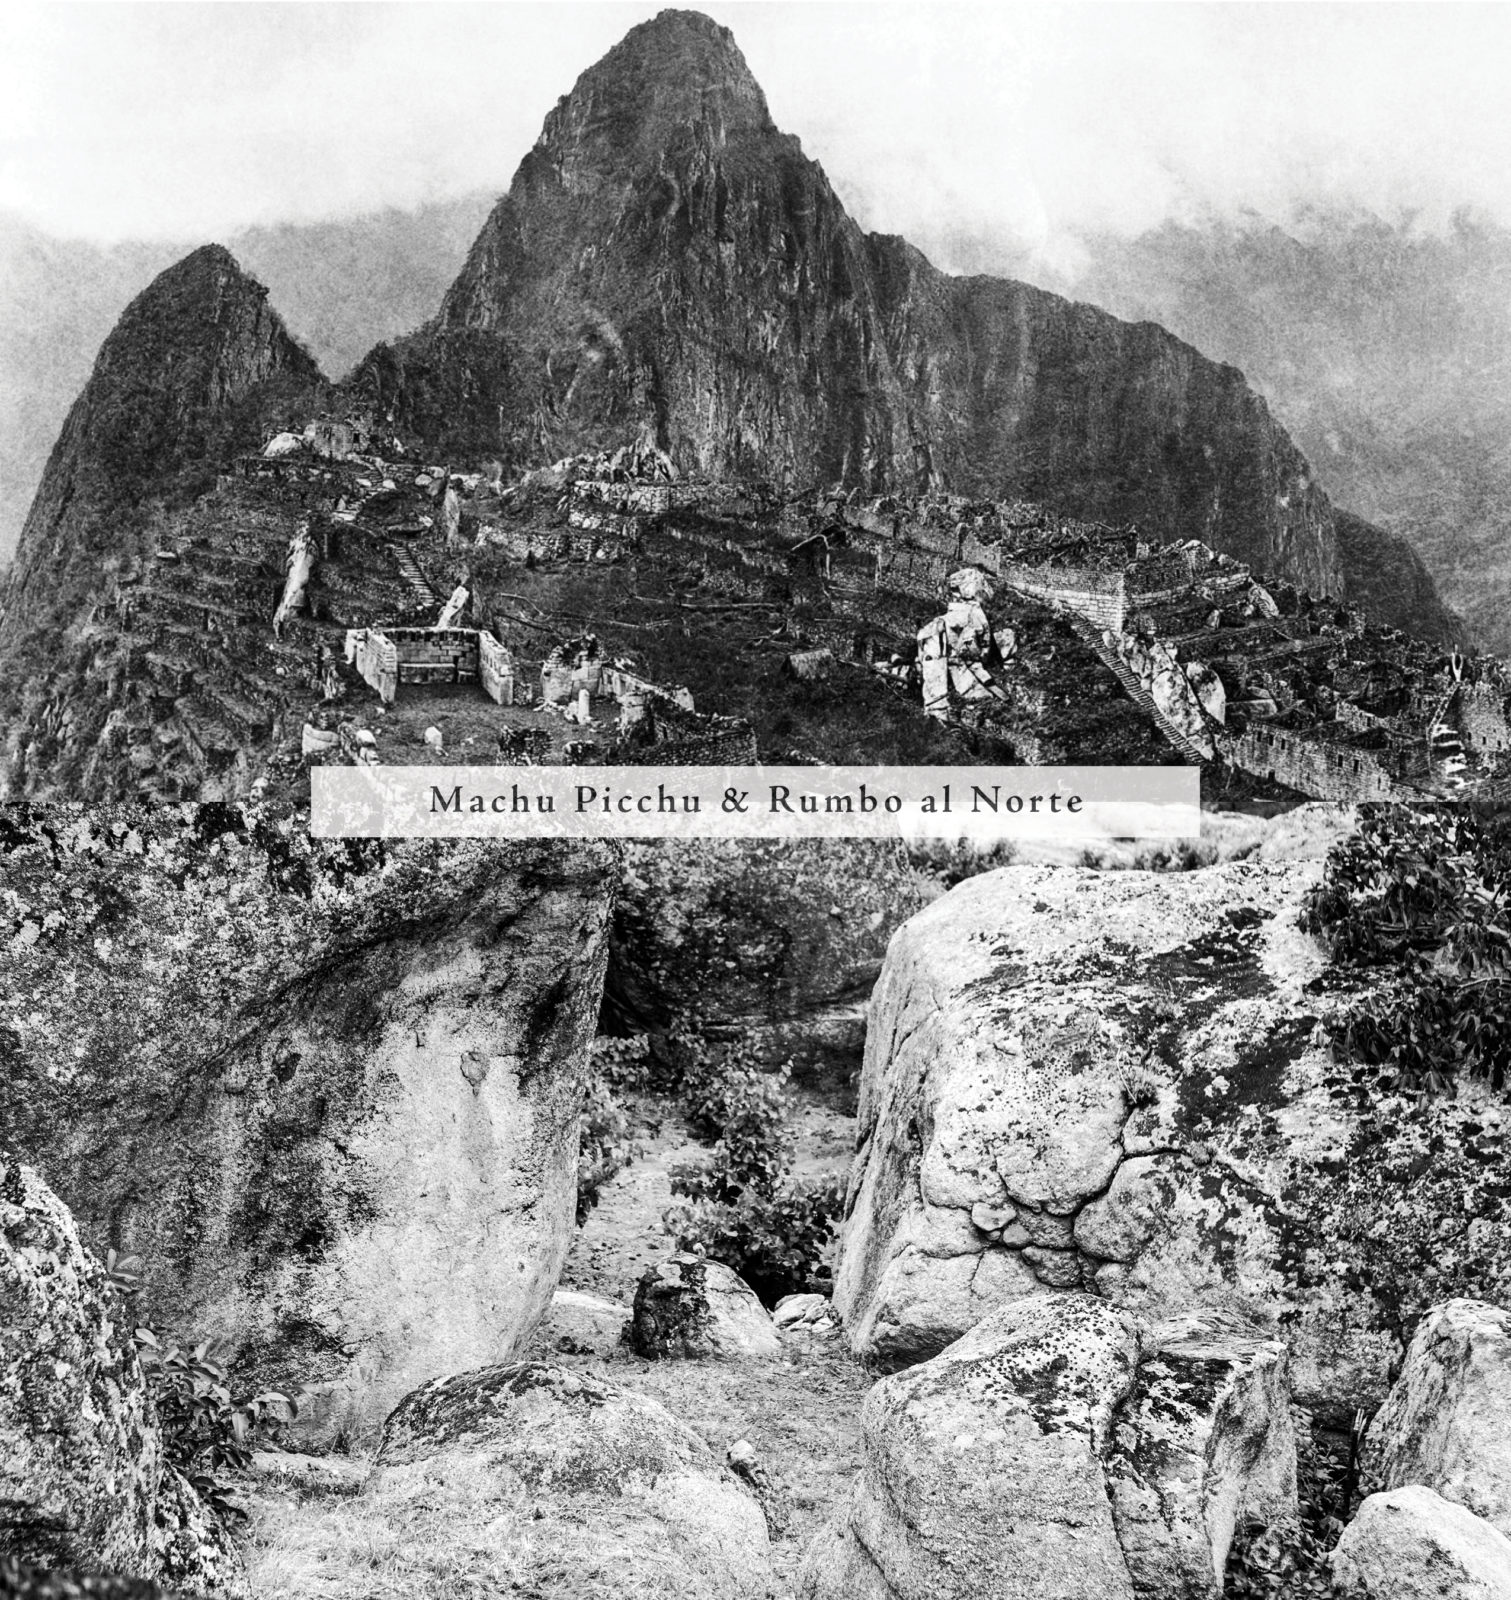 Machu Picchu & Rumbo al Norte – separated at birth?